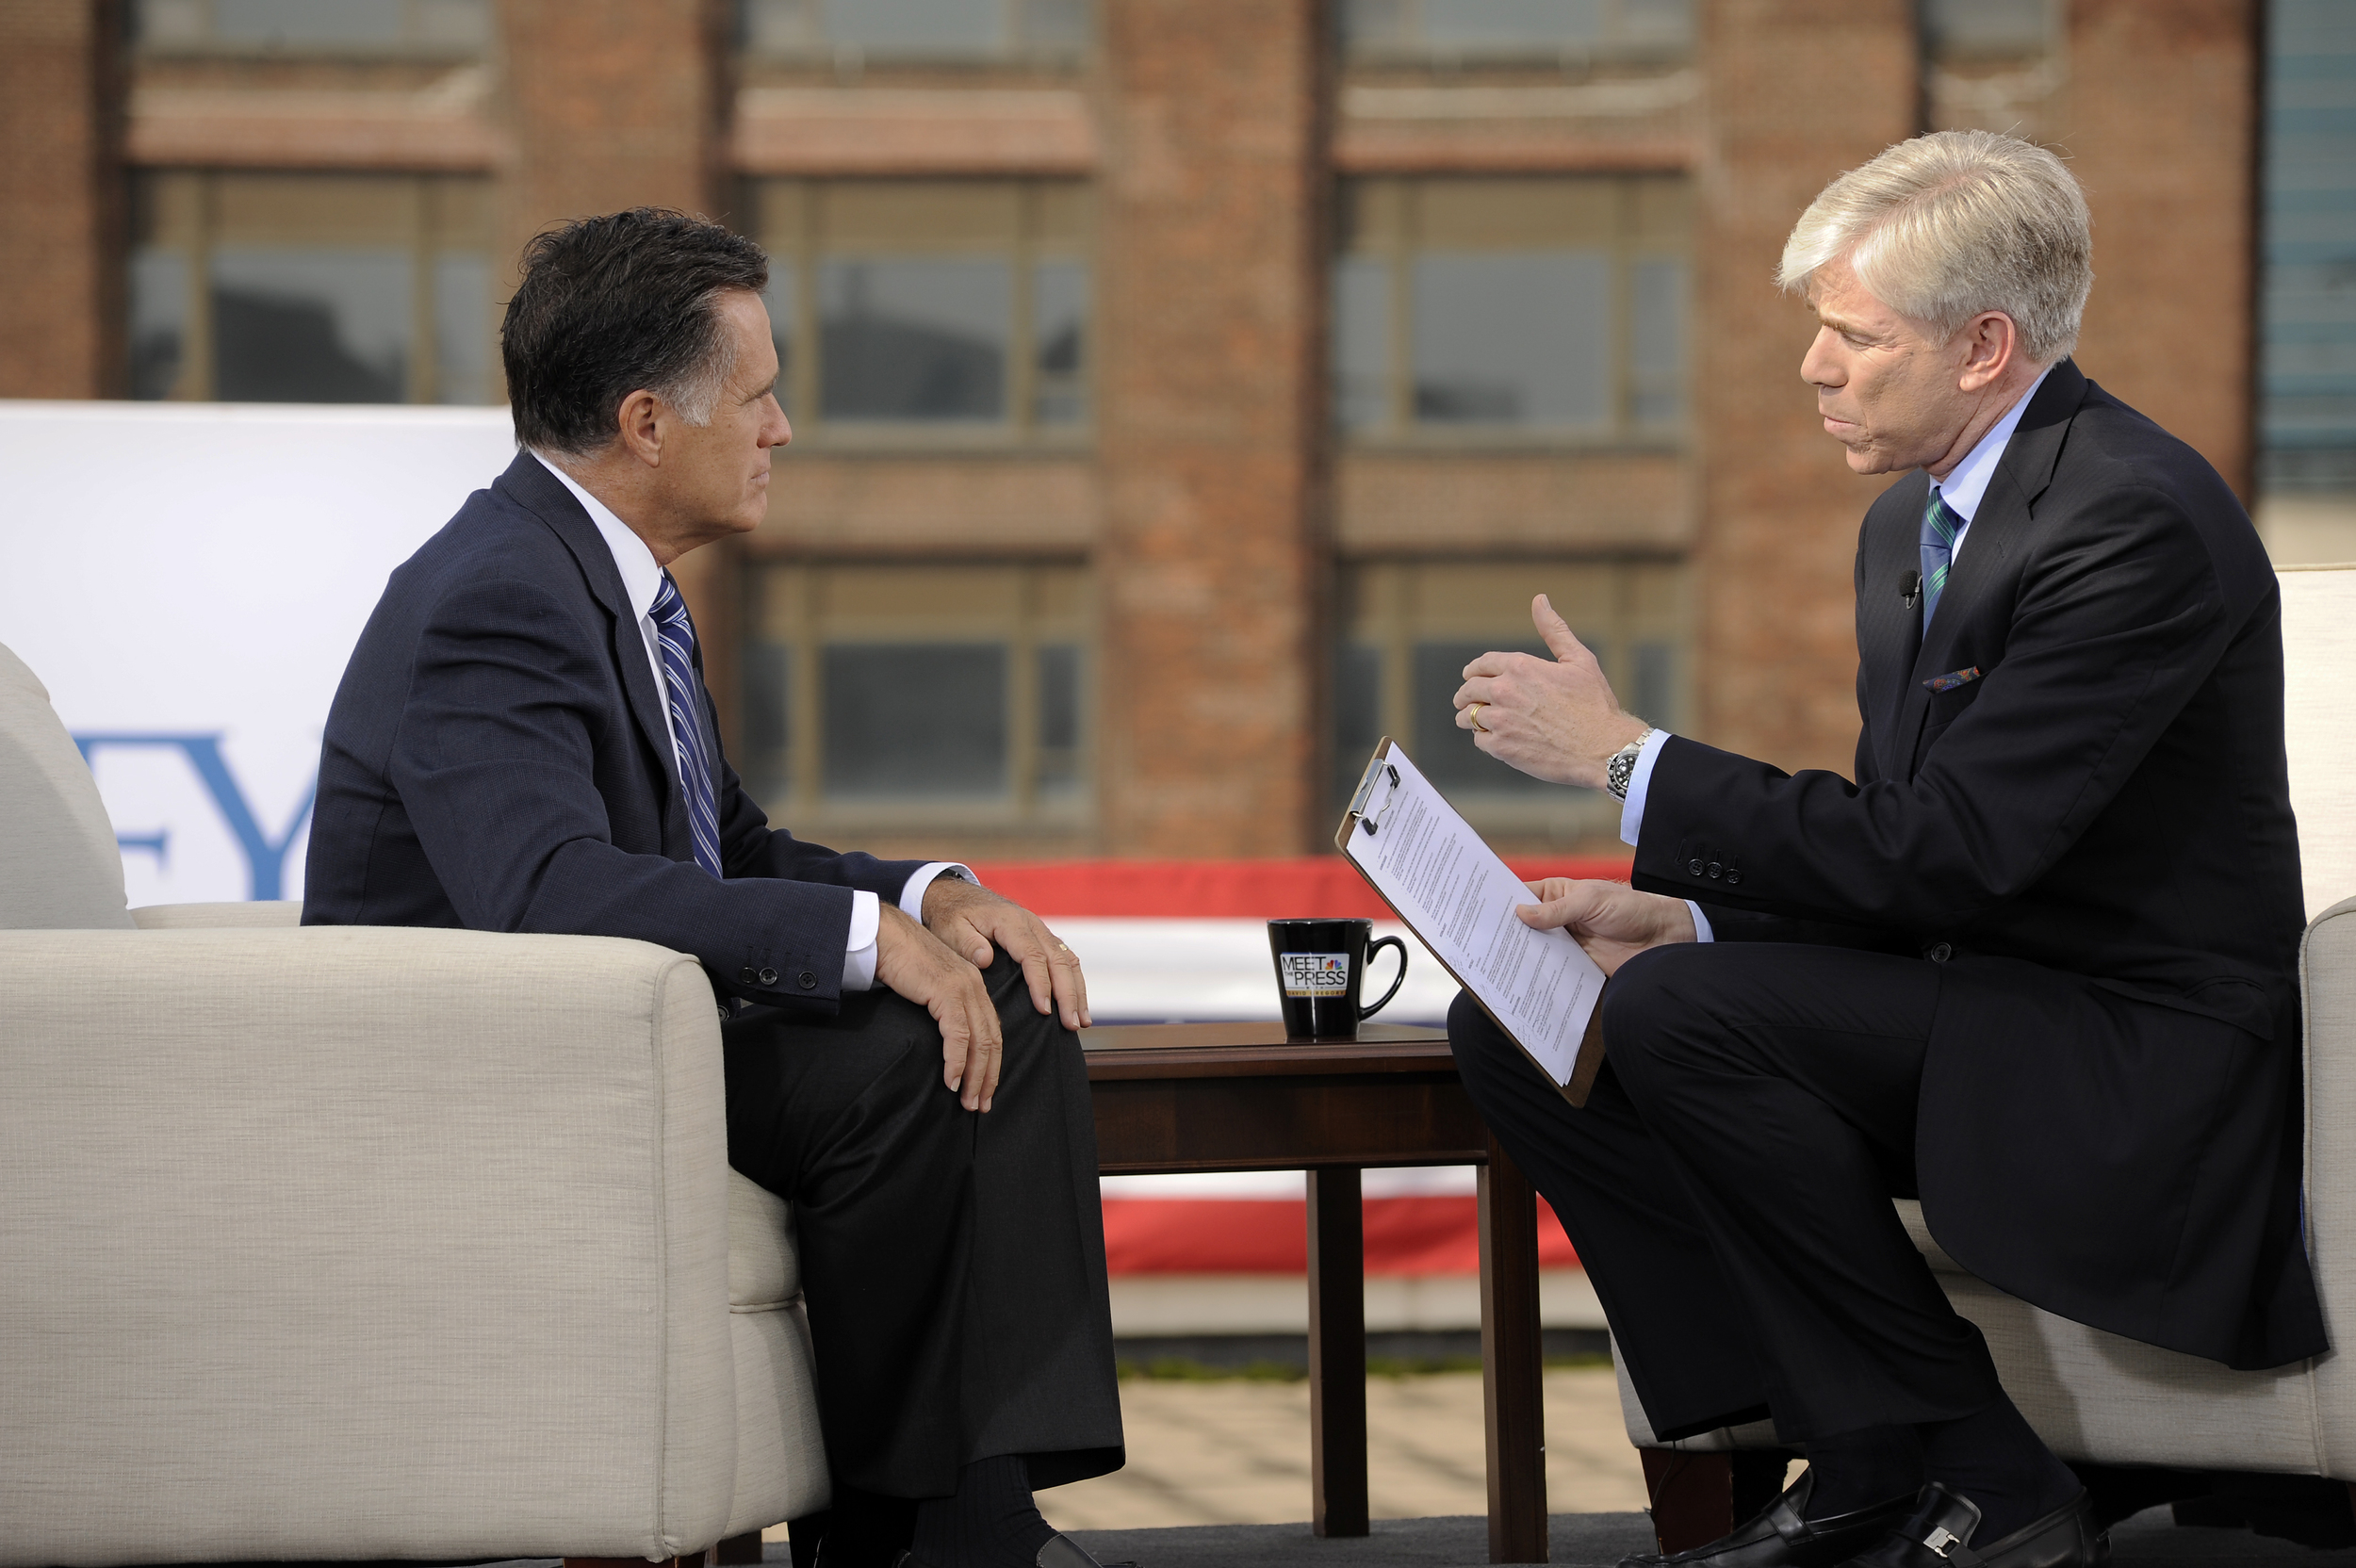 Mitt Romney on NBC Meet the Press with David Gregory